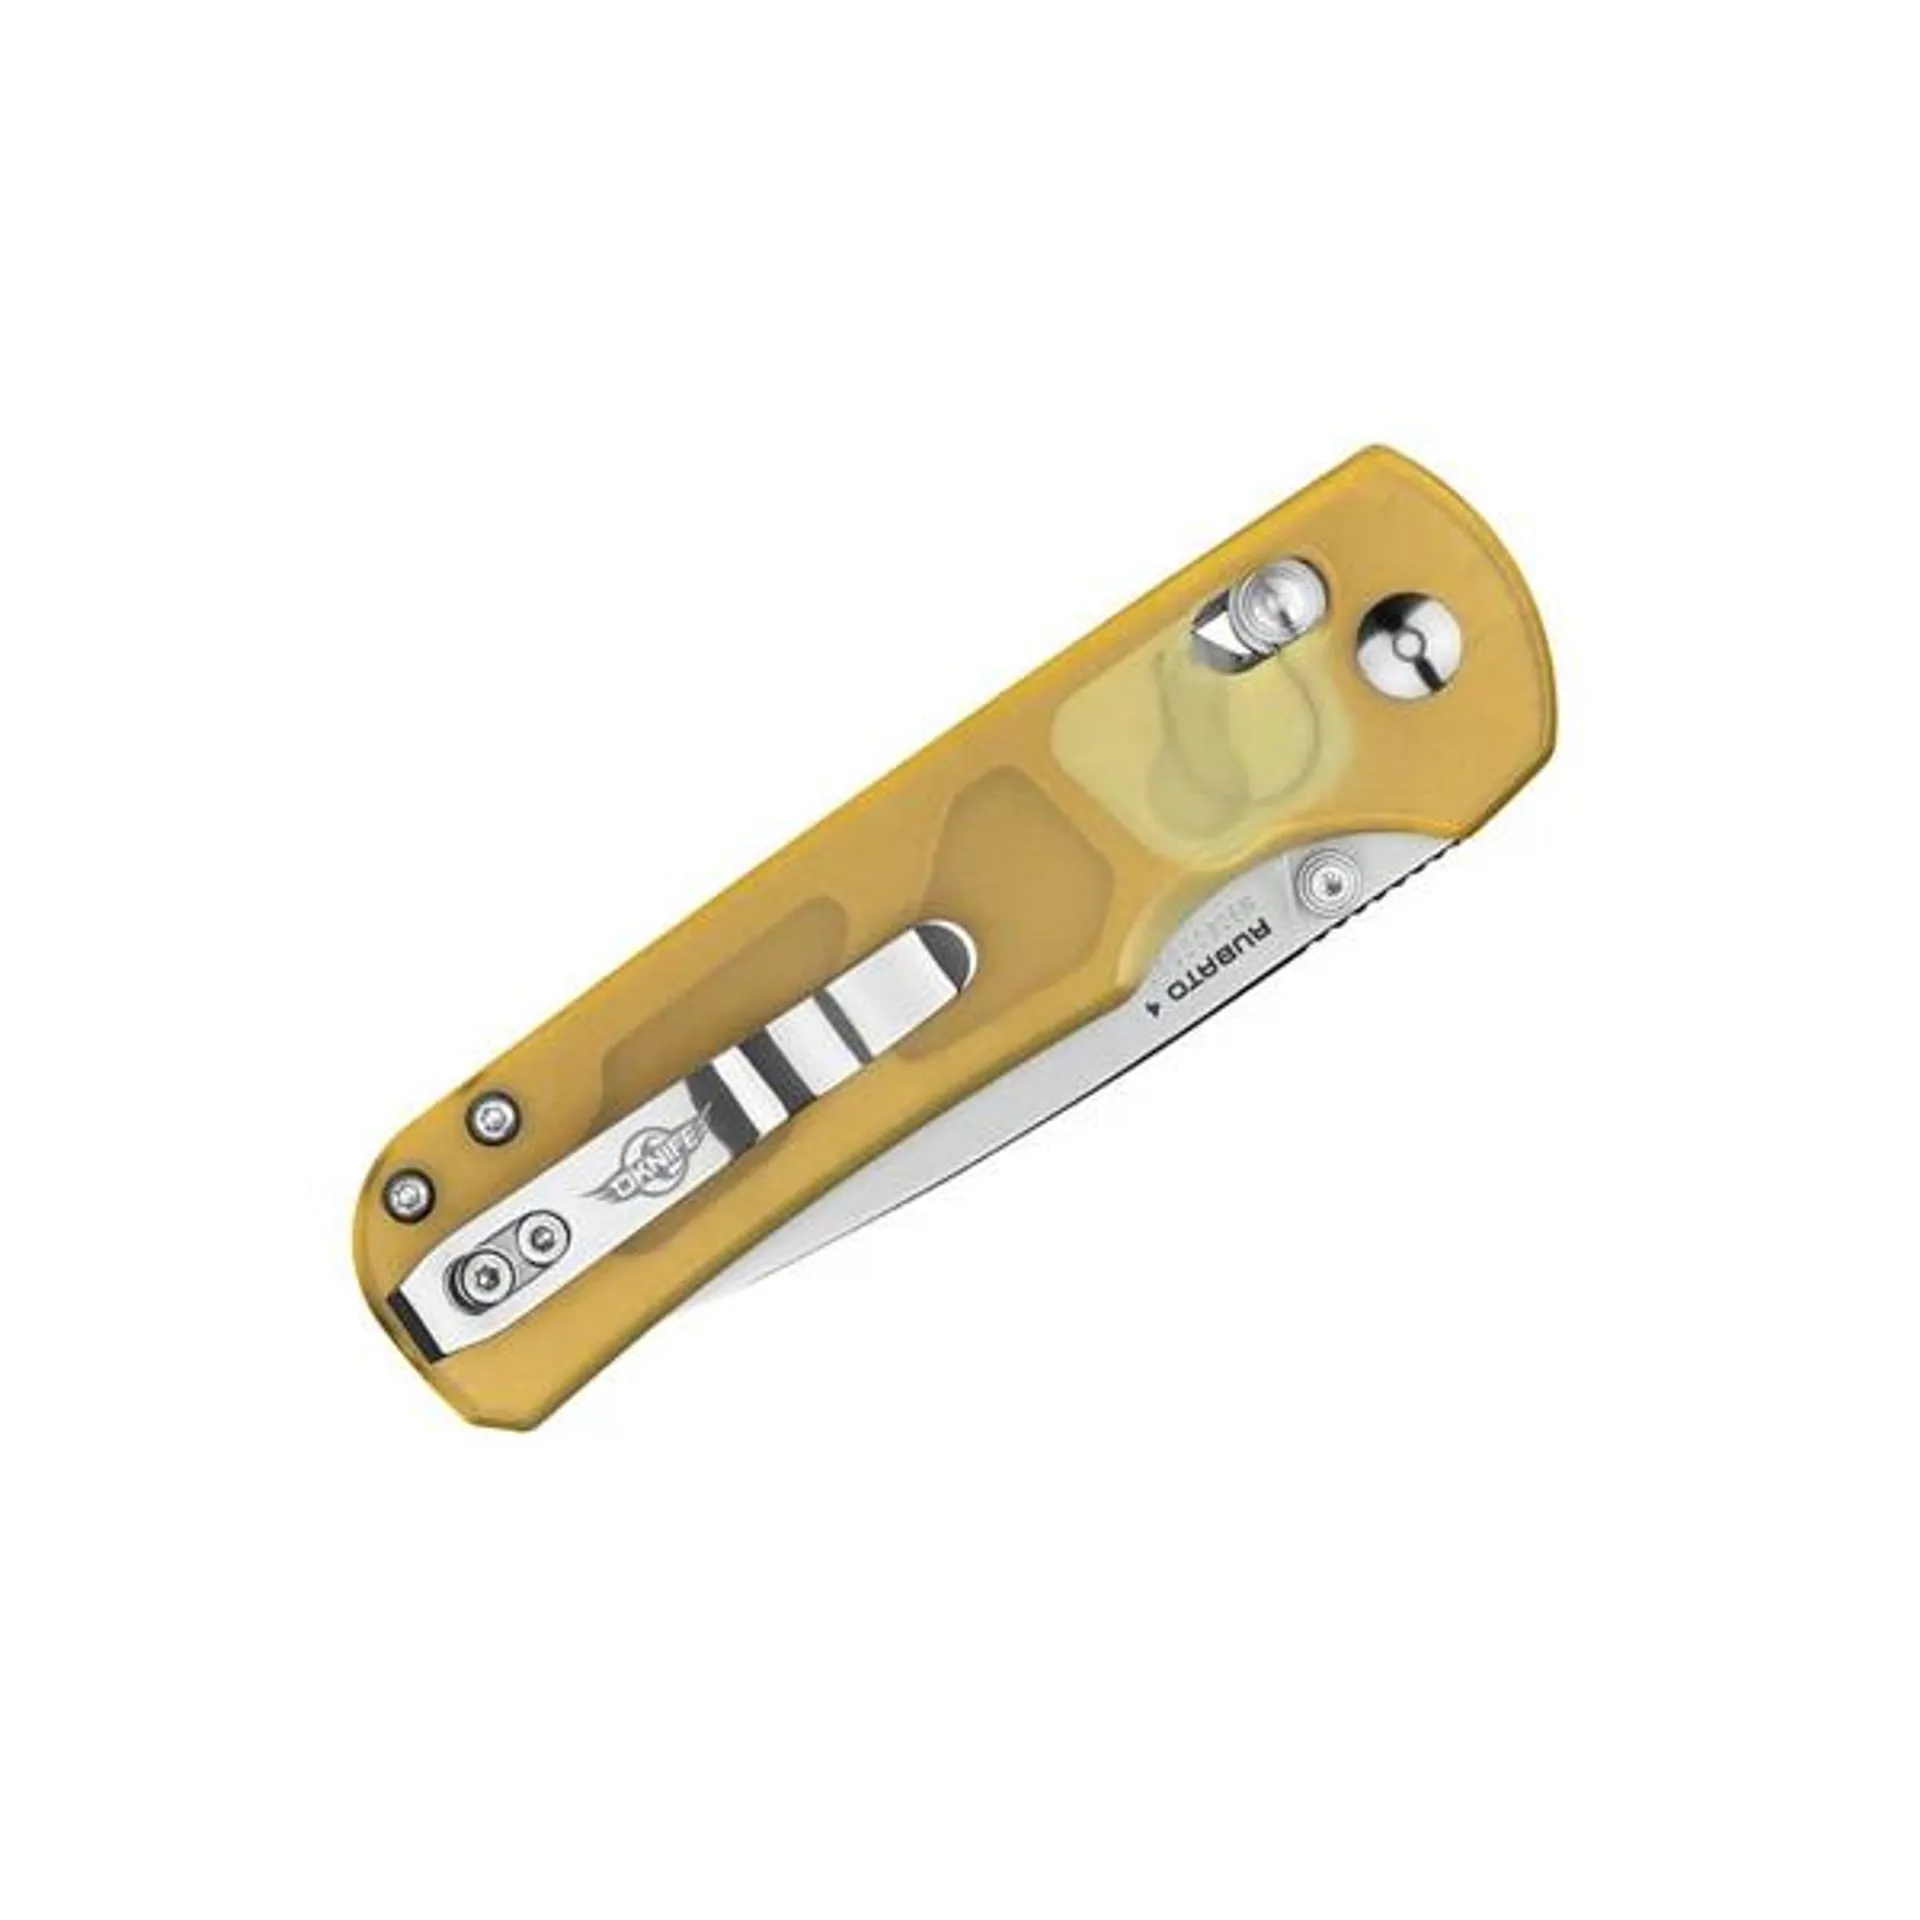 Olight Rubato 4 Stable and Smooth Rail Lock PEI Handle EDC Tool